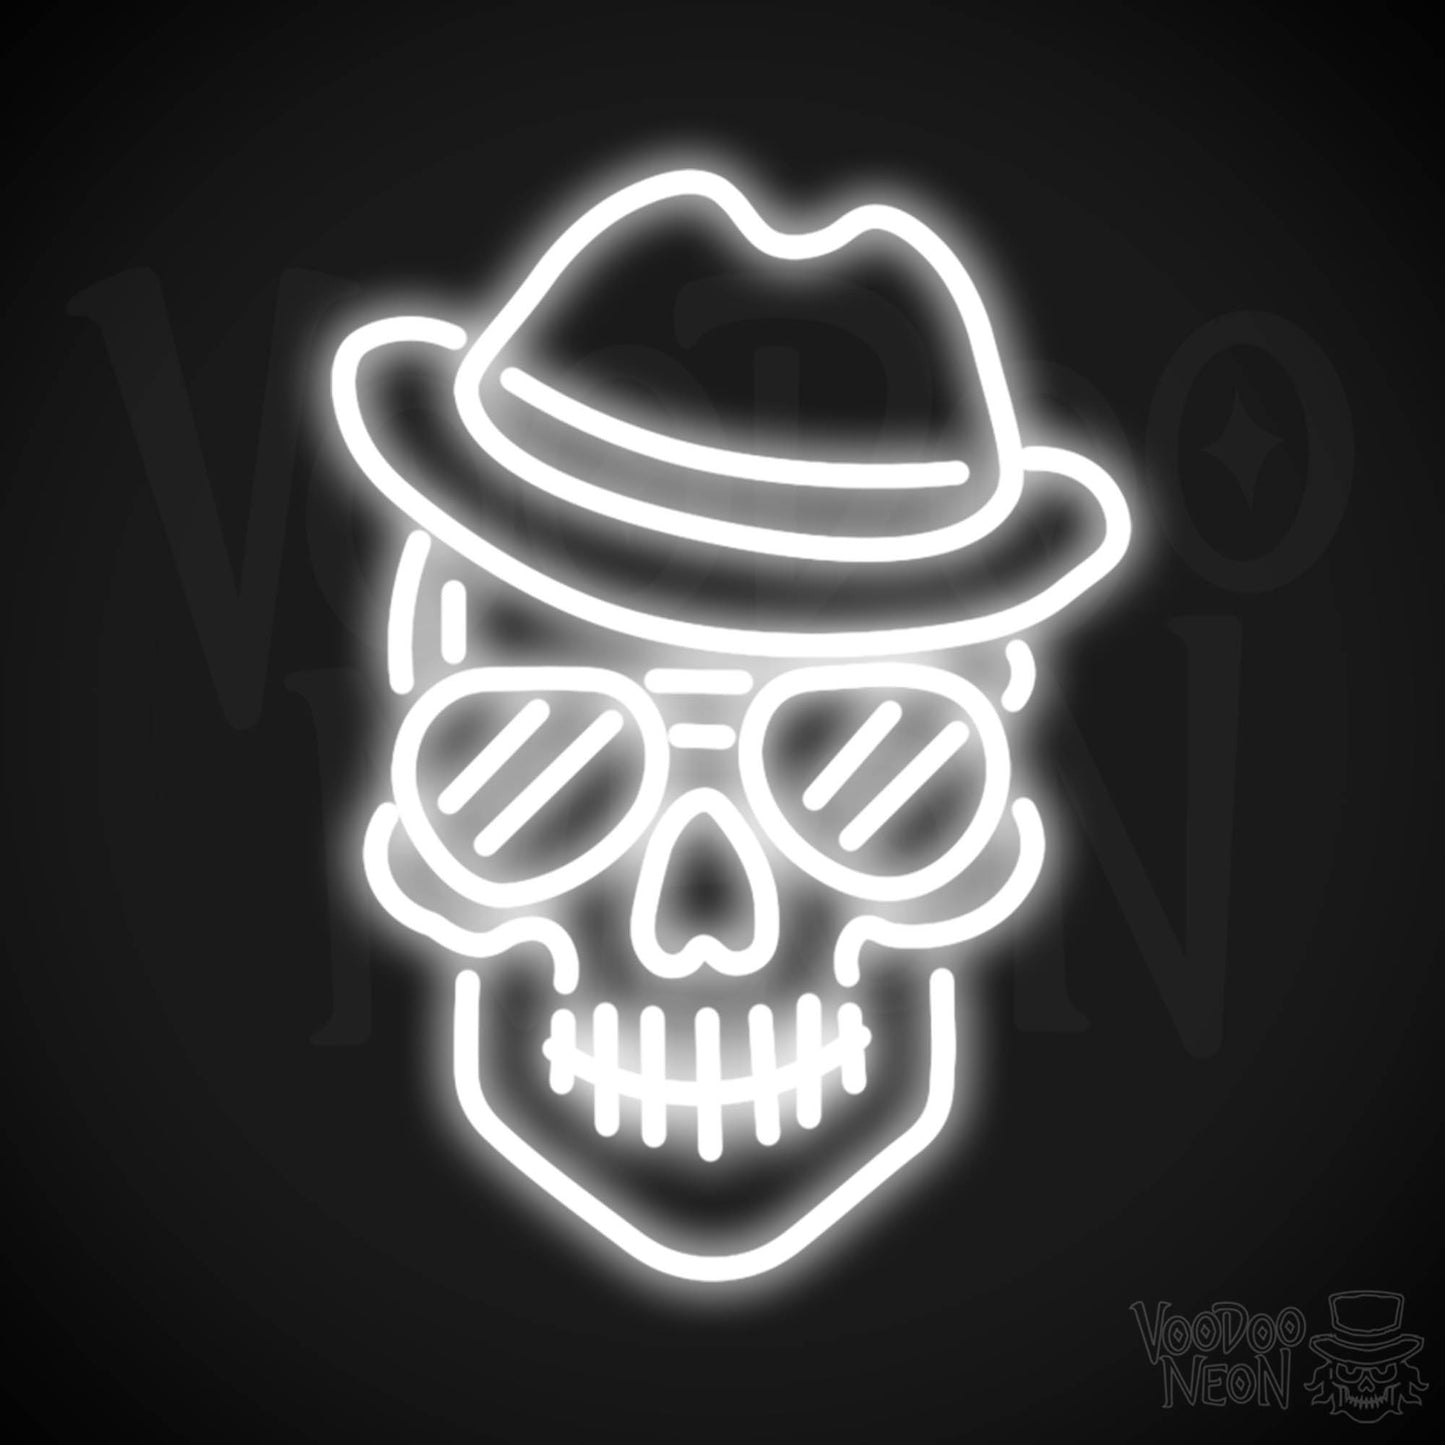 Skull Face Neon Sign - Neon Skull Face Sign - Neon Skull Light - Wall Art - Color White